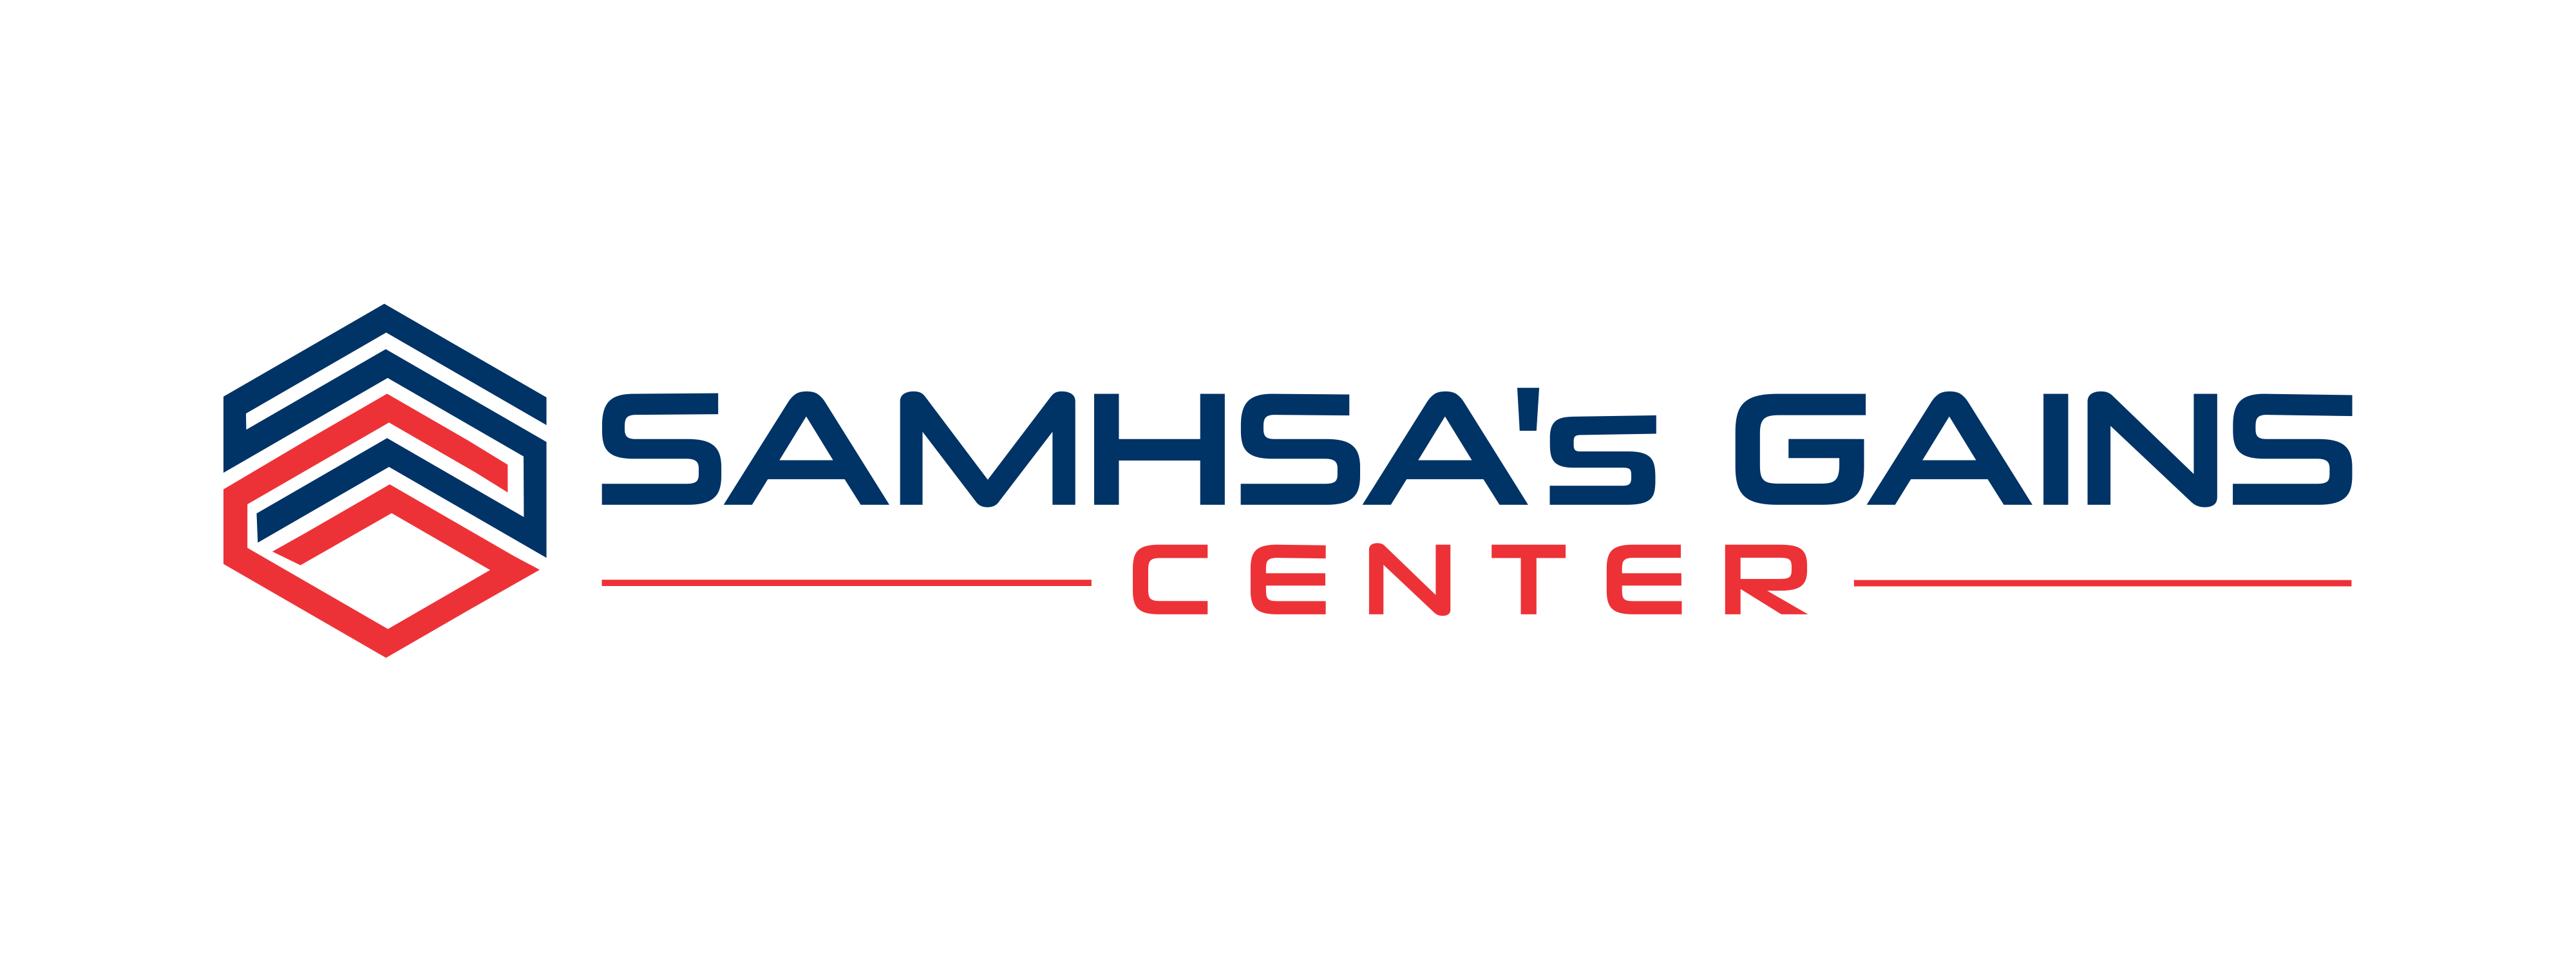 SAMHSA Logo - Creating Disparity Impact Statements to Optimize Early Diversion